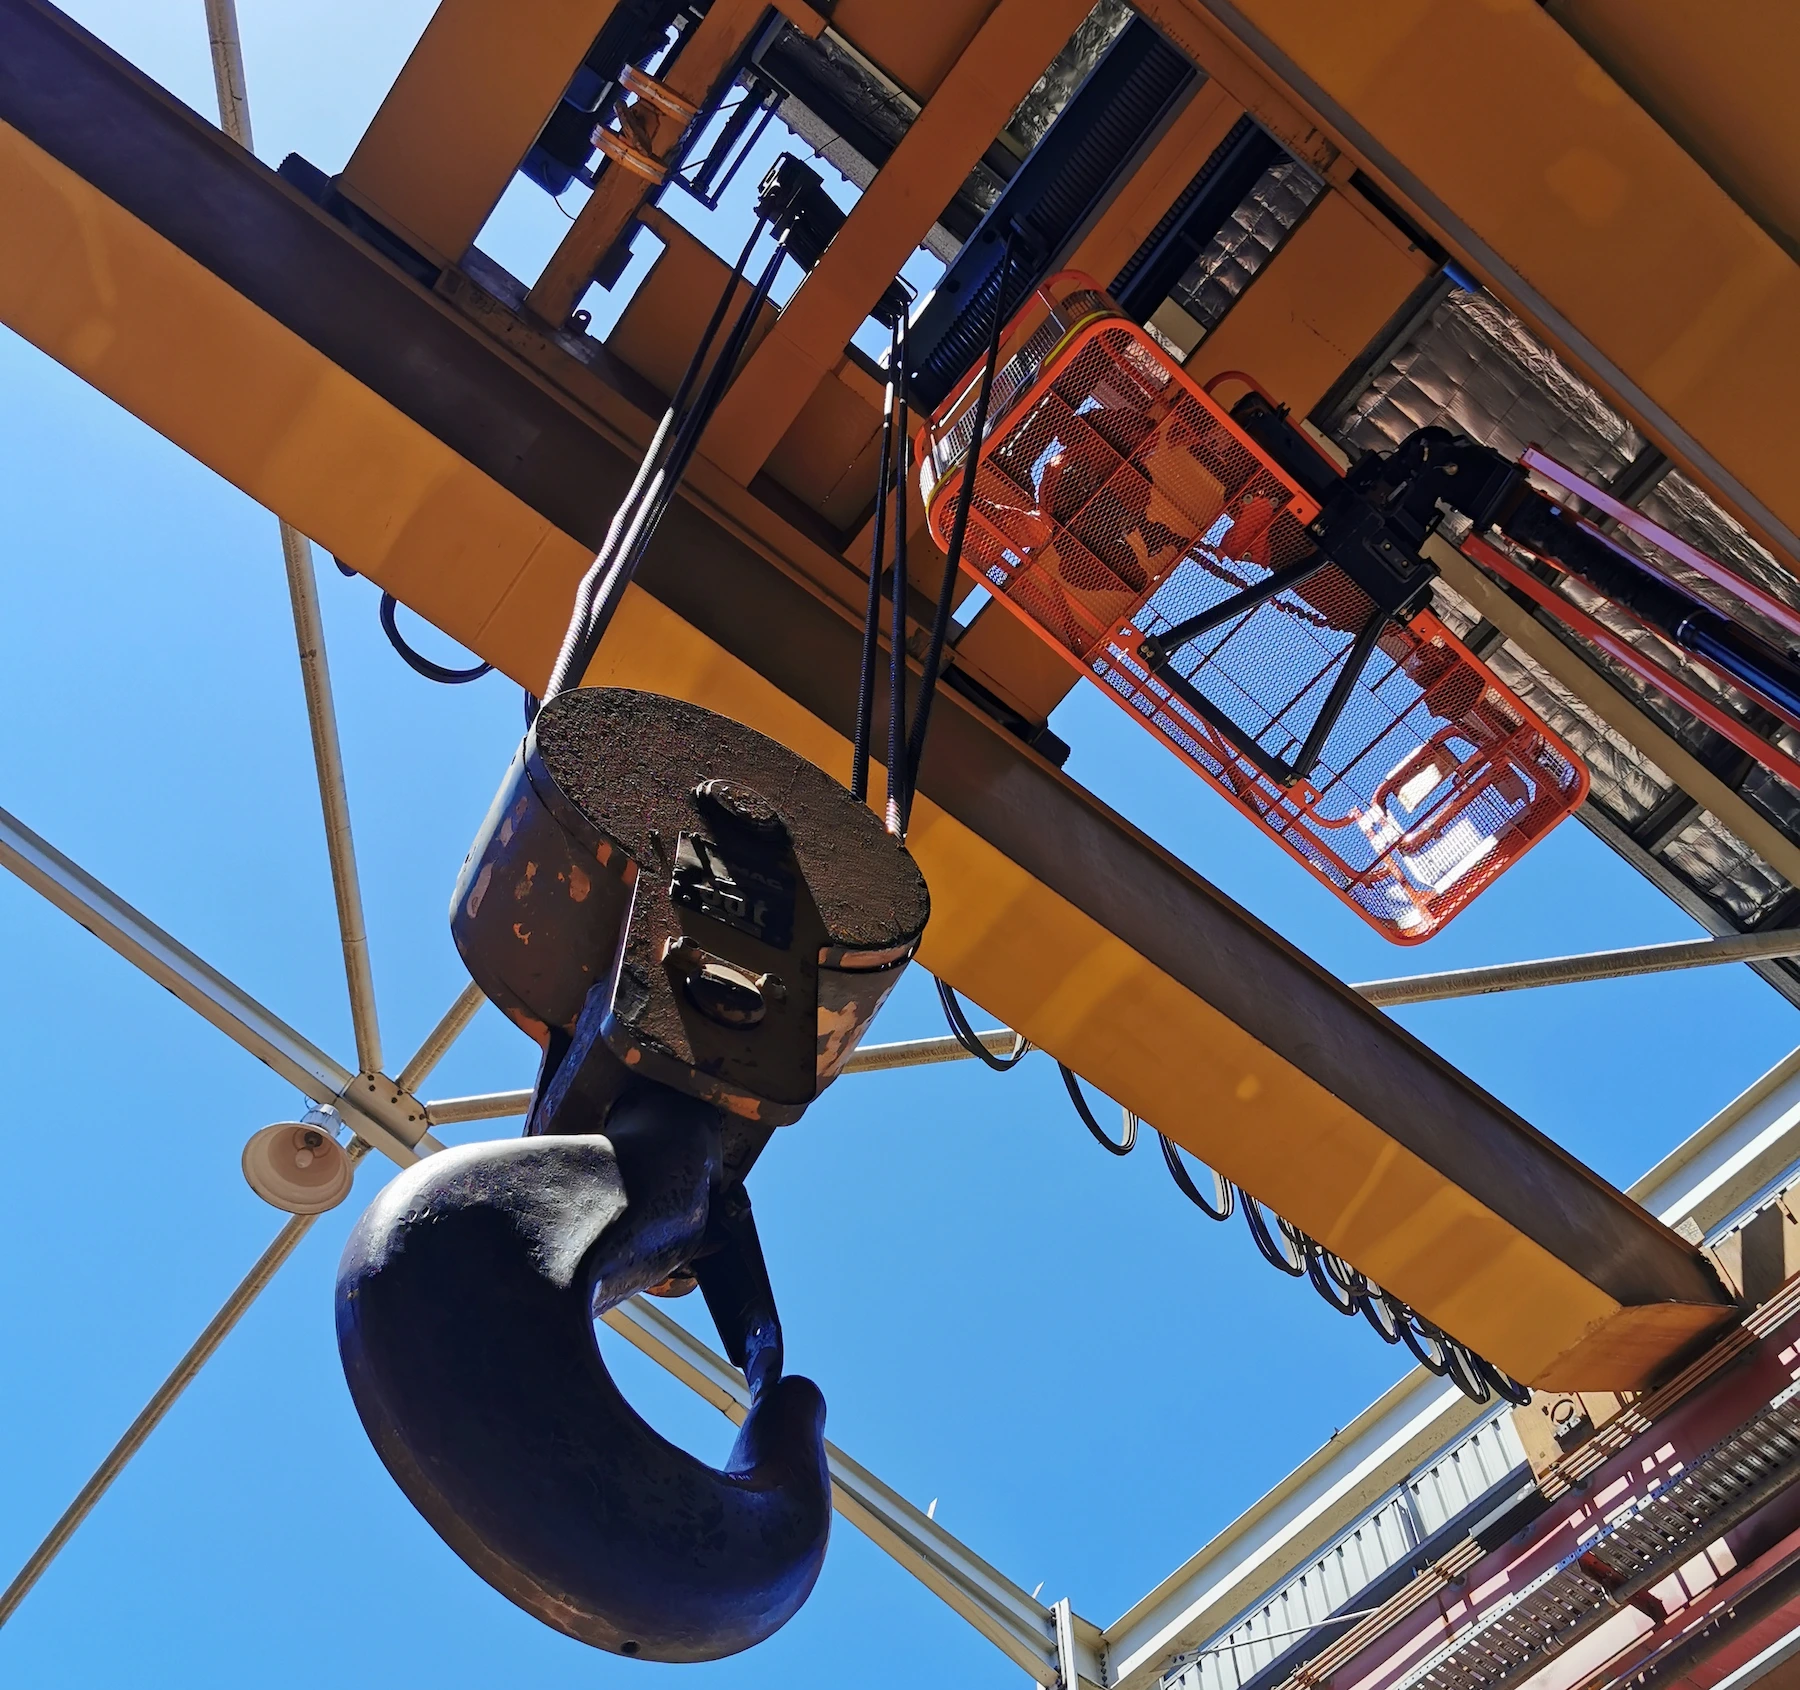 Overhead crane servicing